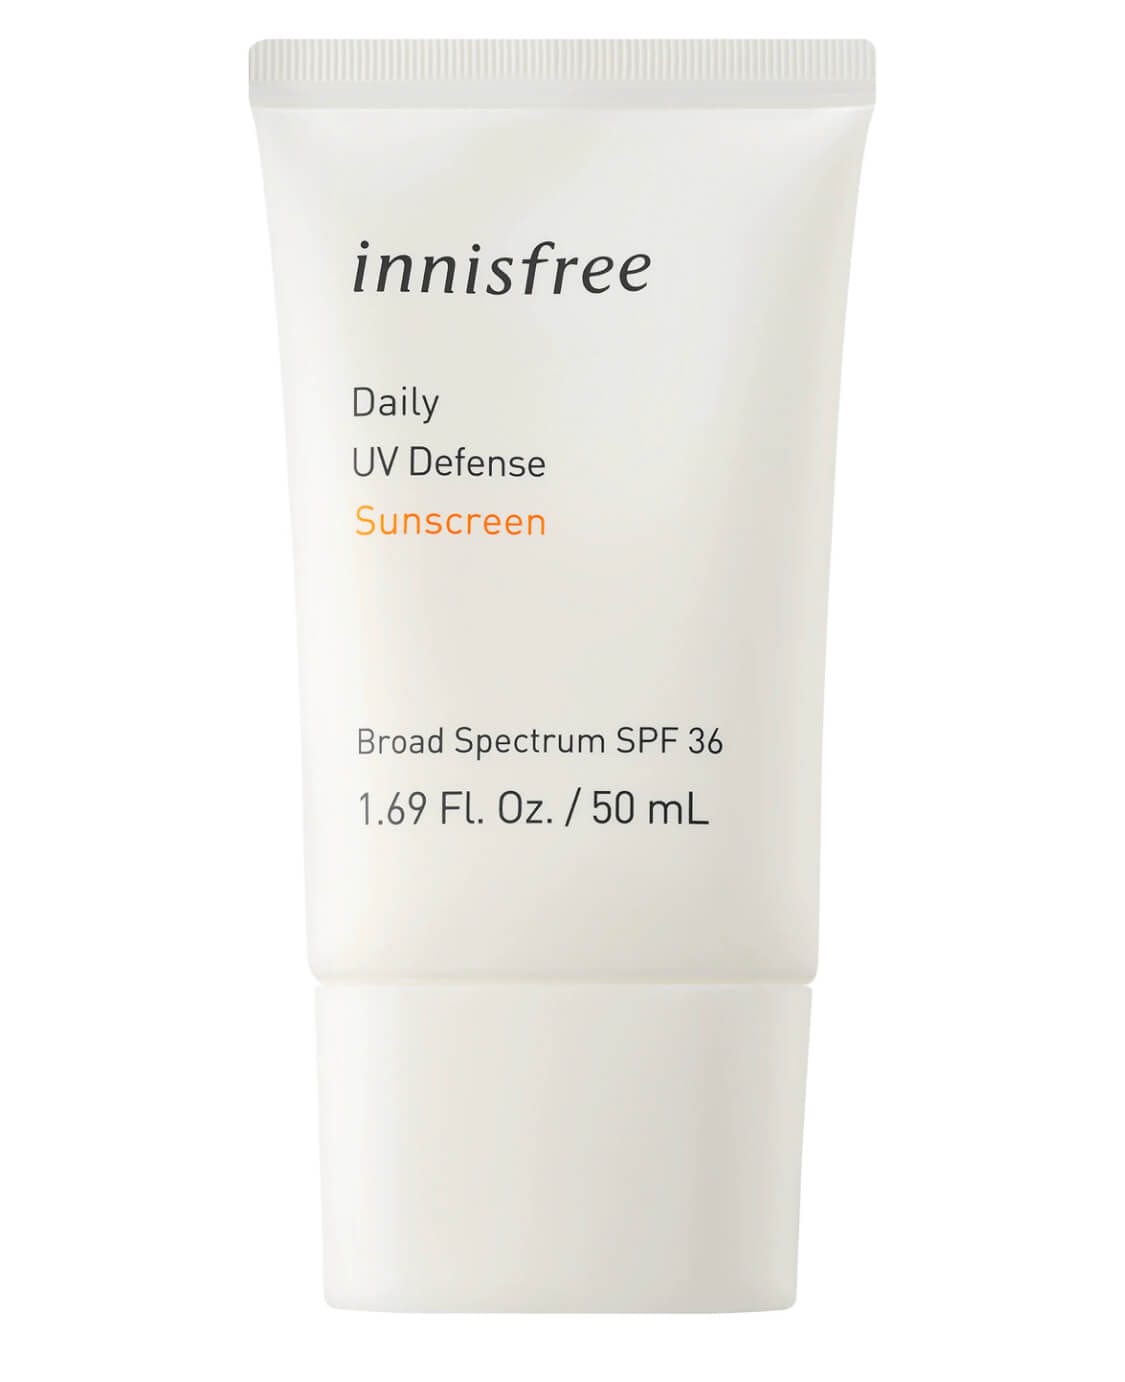 Daily UV Defense Sunscreen SPF 36 by Innisfree